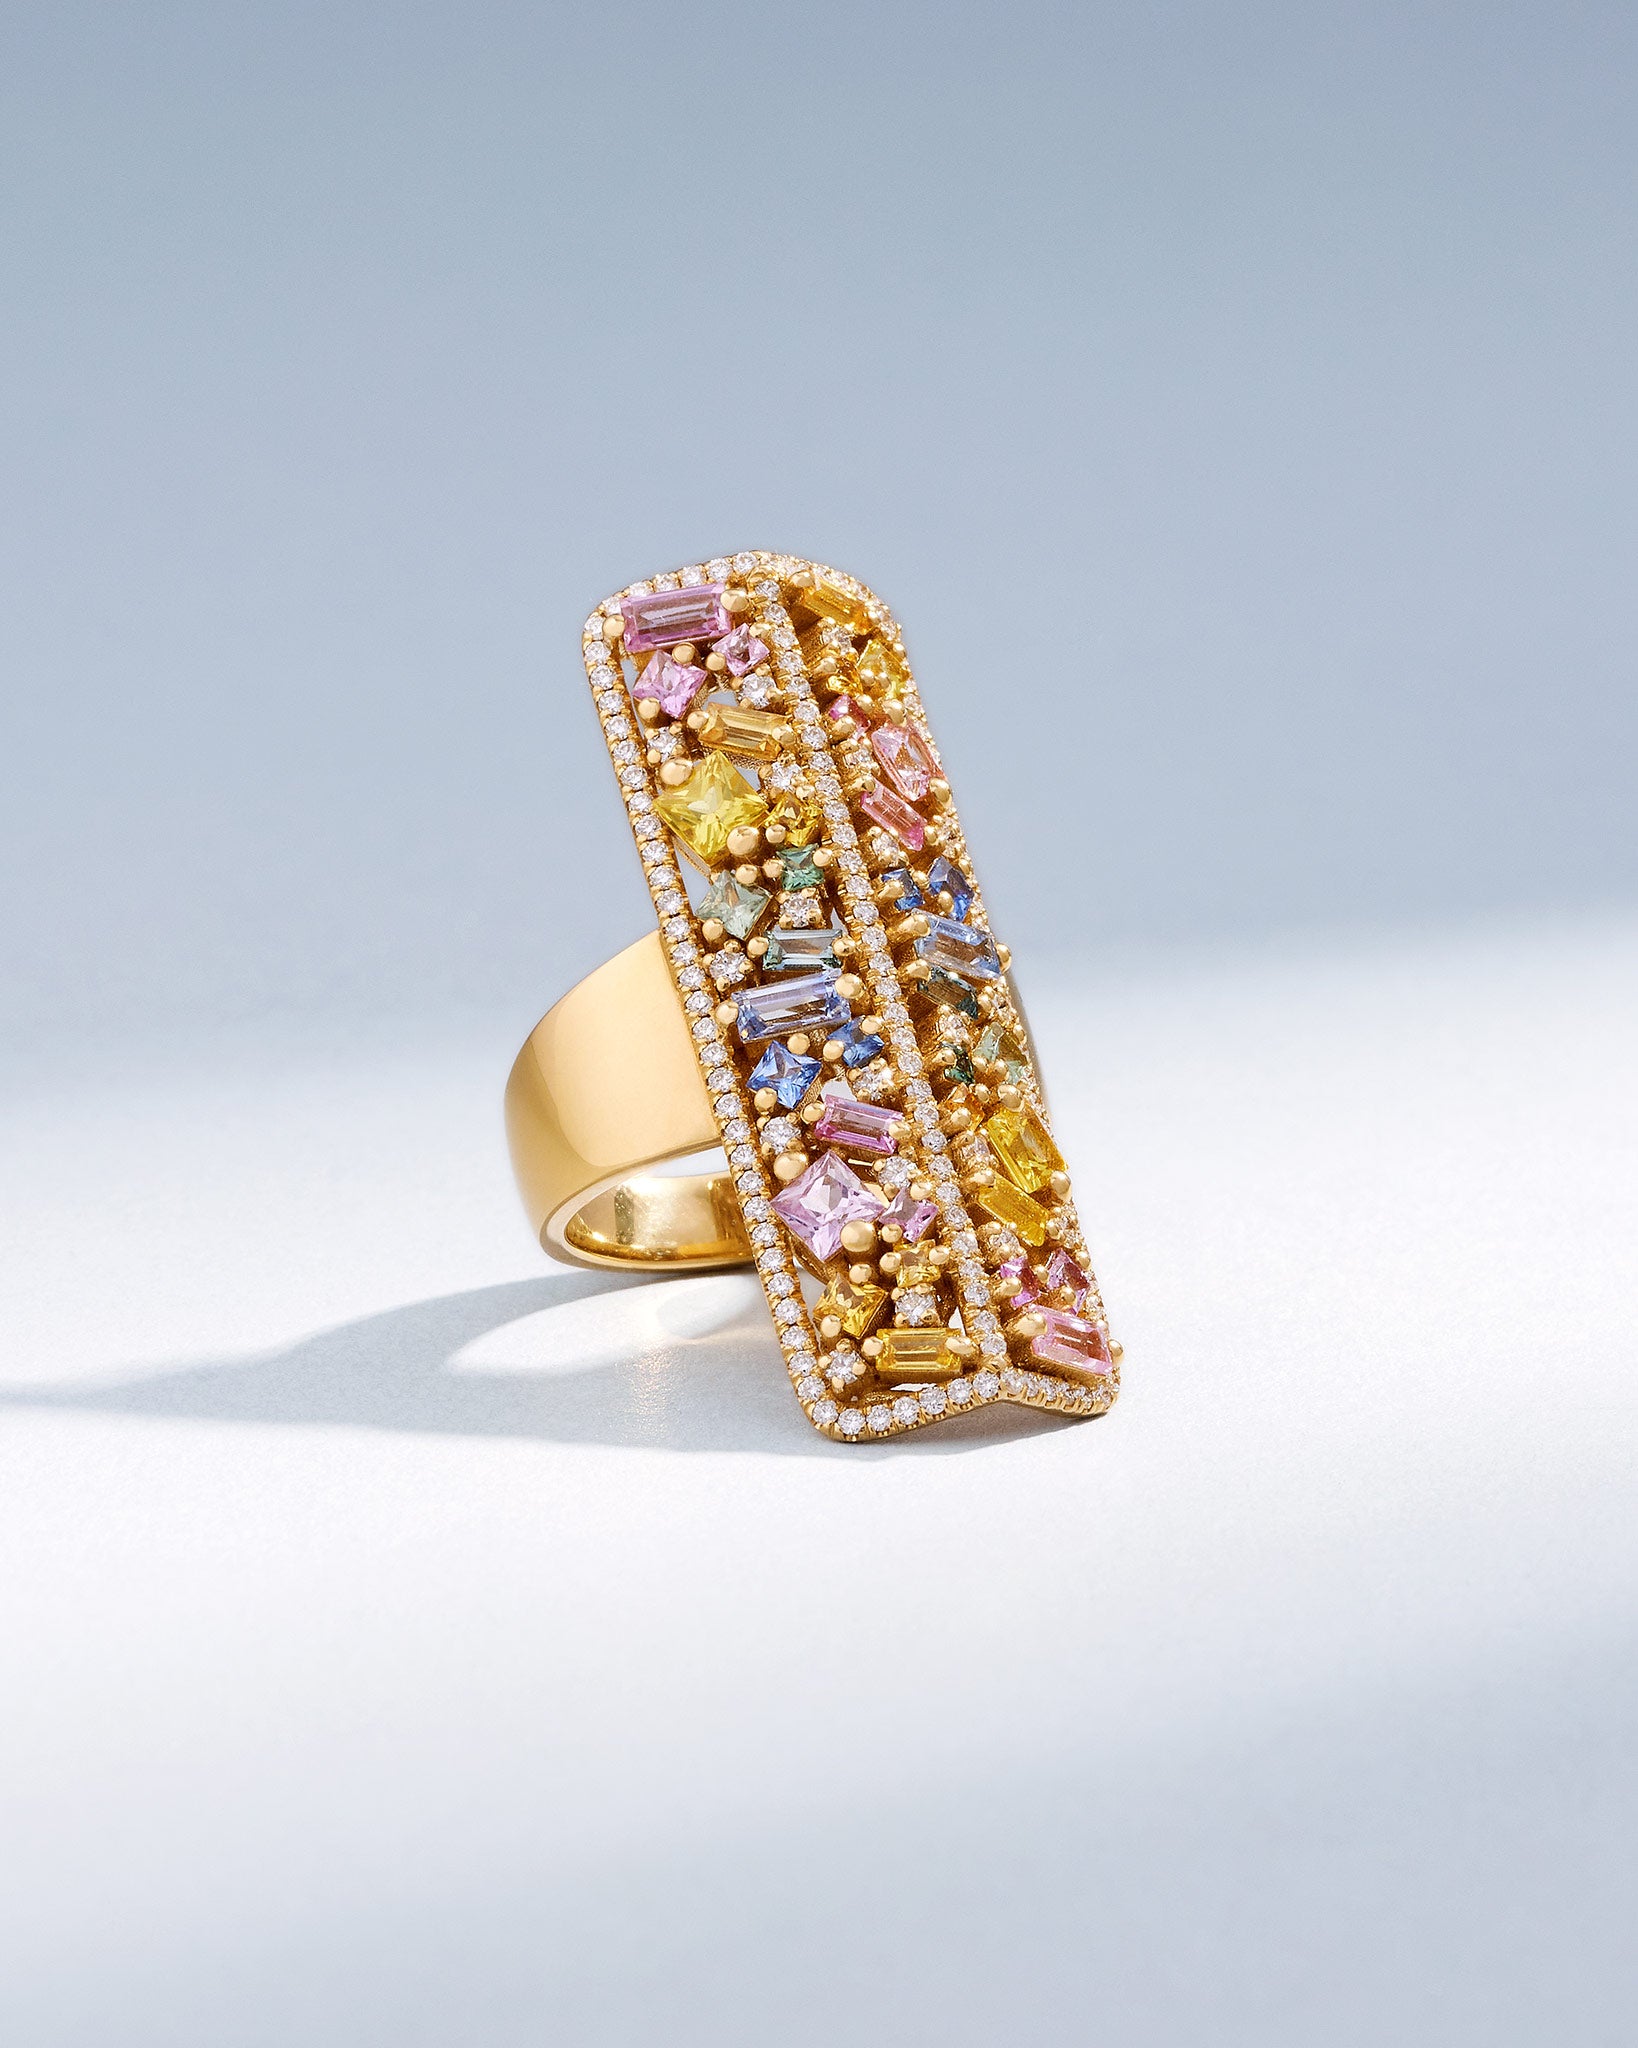 Suzanne Kalan La Fantaisie Sunbeam Pastel Sapphire Ring in 18k yellow gold 